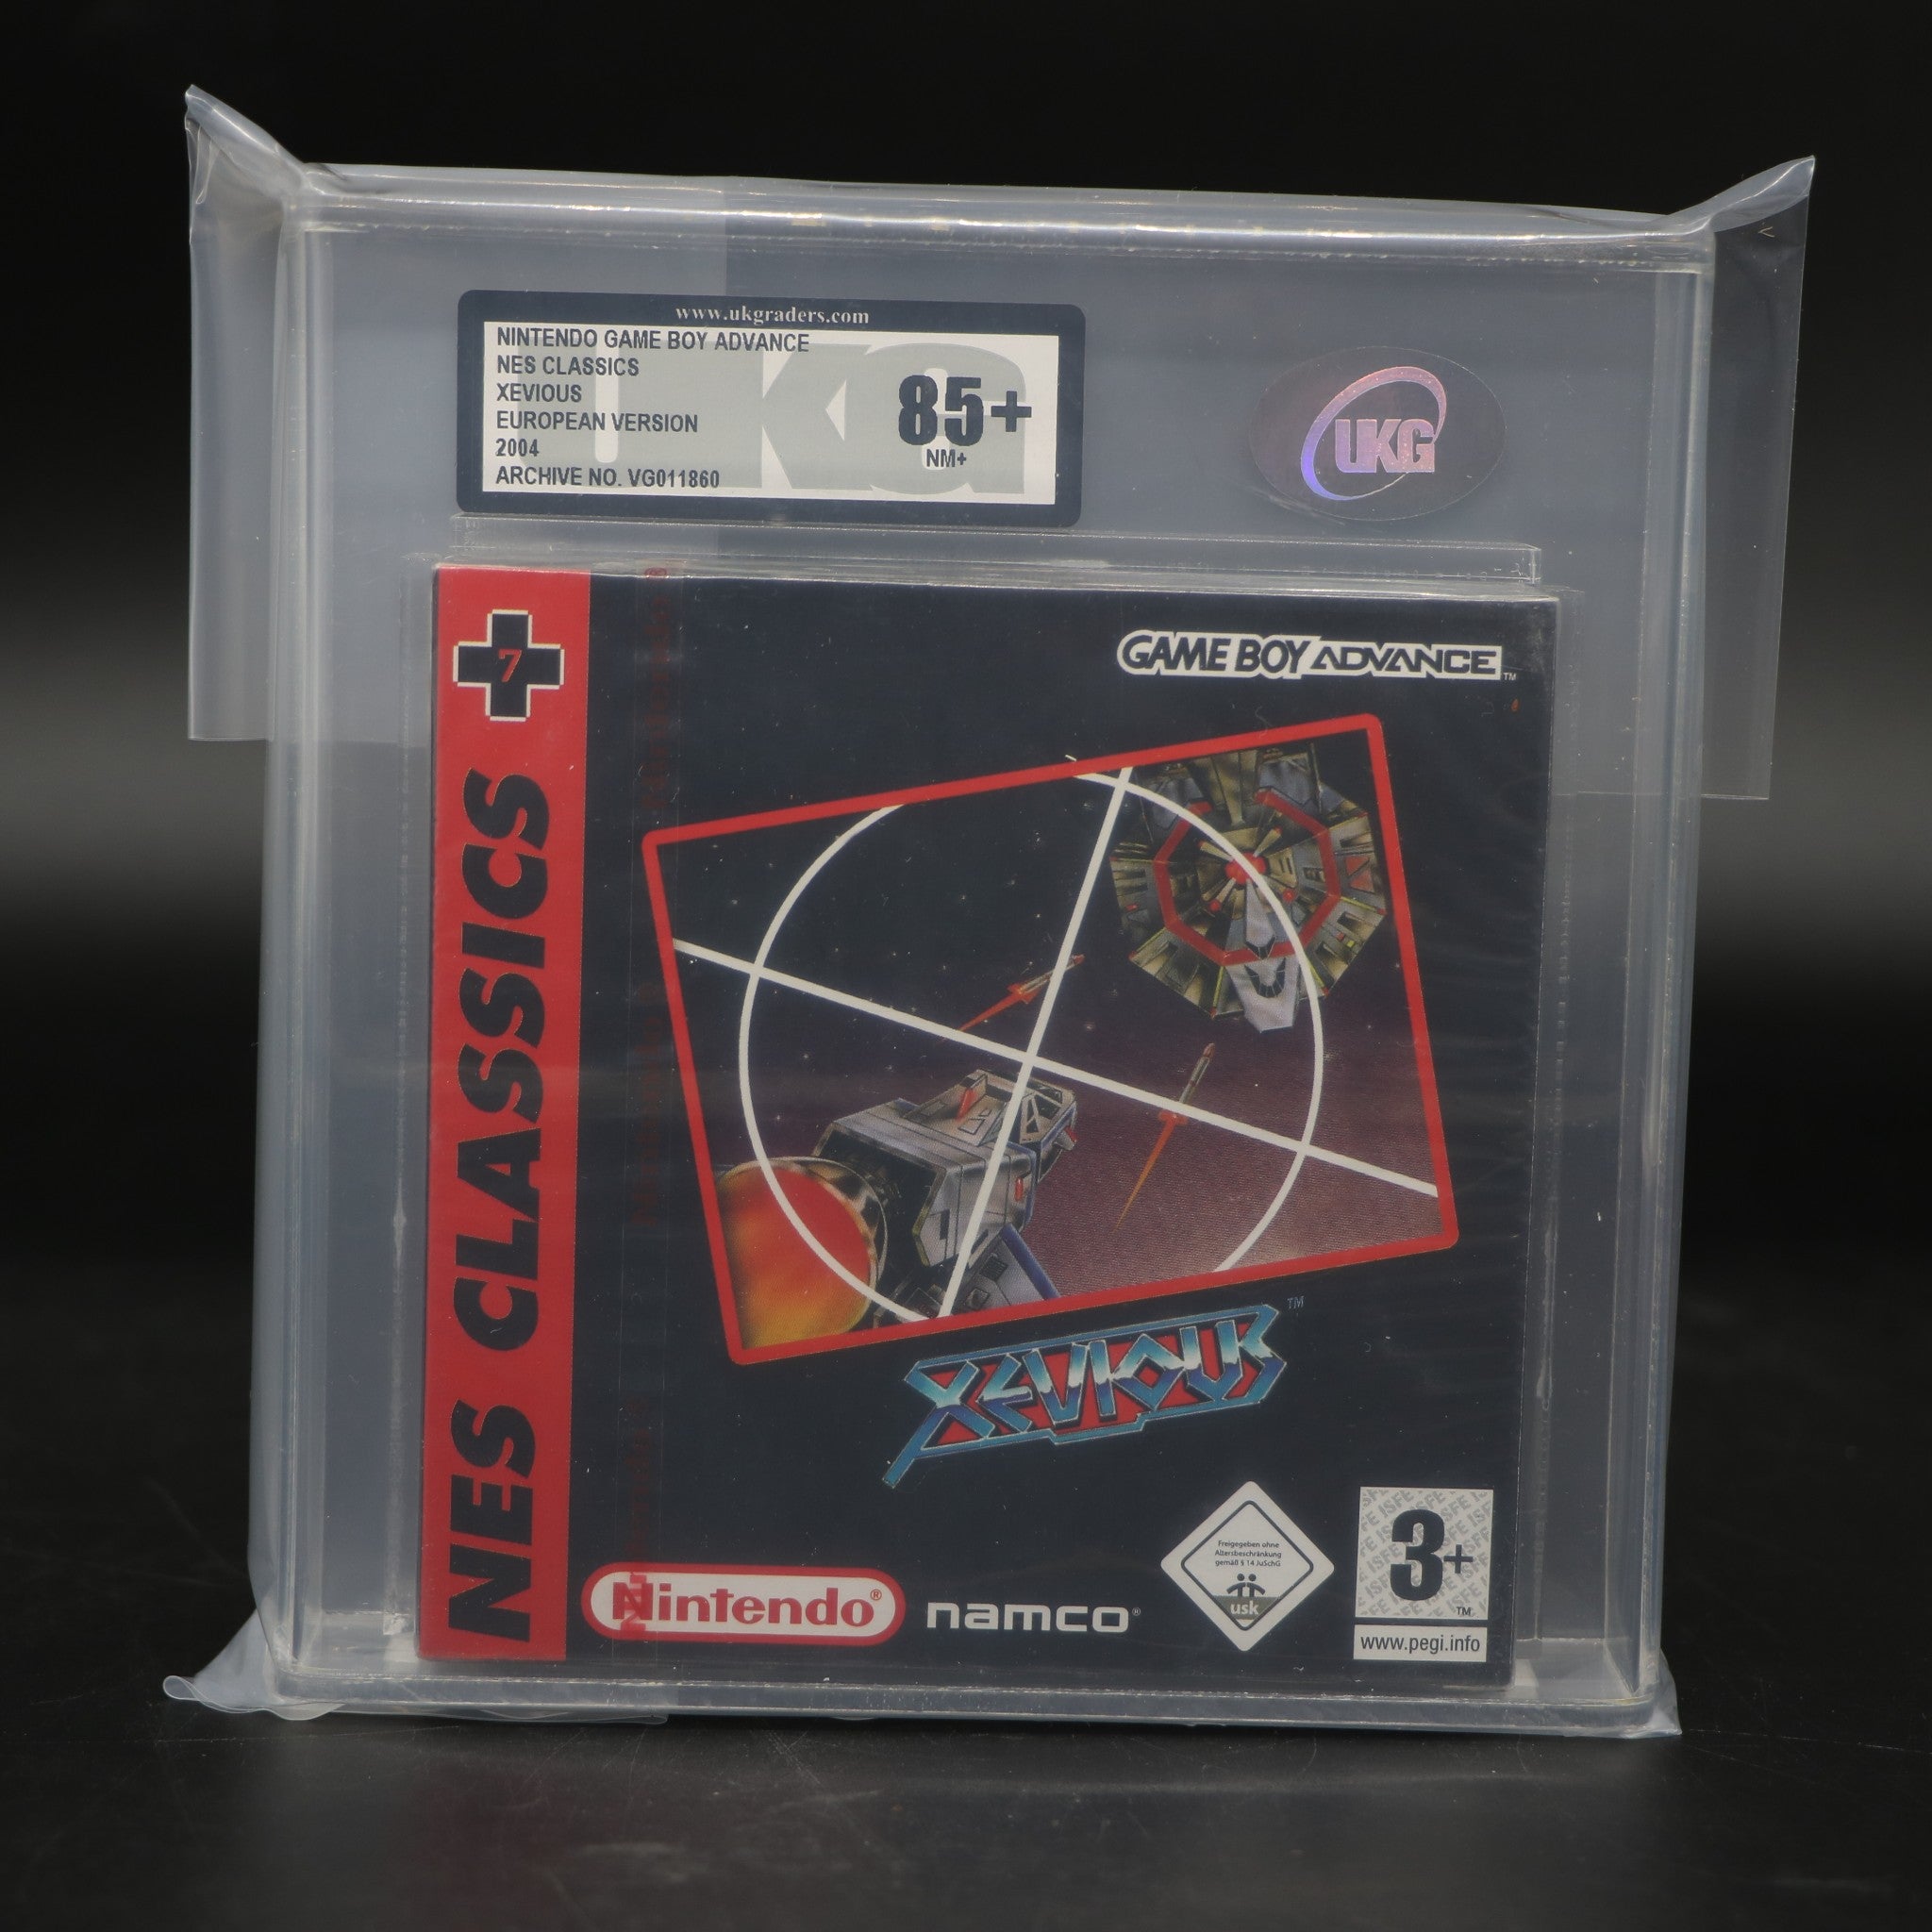 Xevious NES Classics | Nintendo Gameboy Advanced GBA Game | UKG Graded 85+ NM